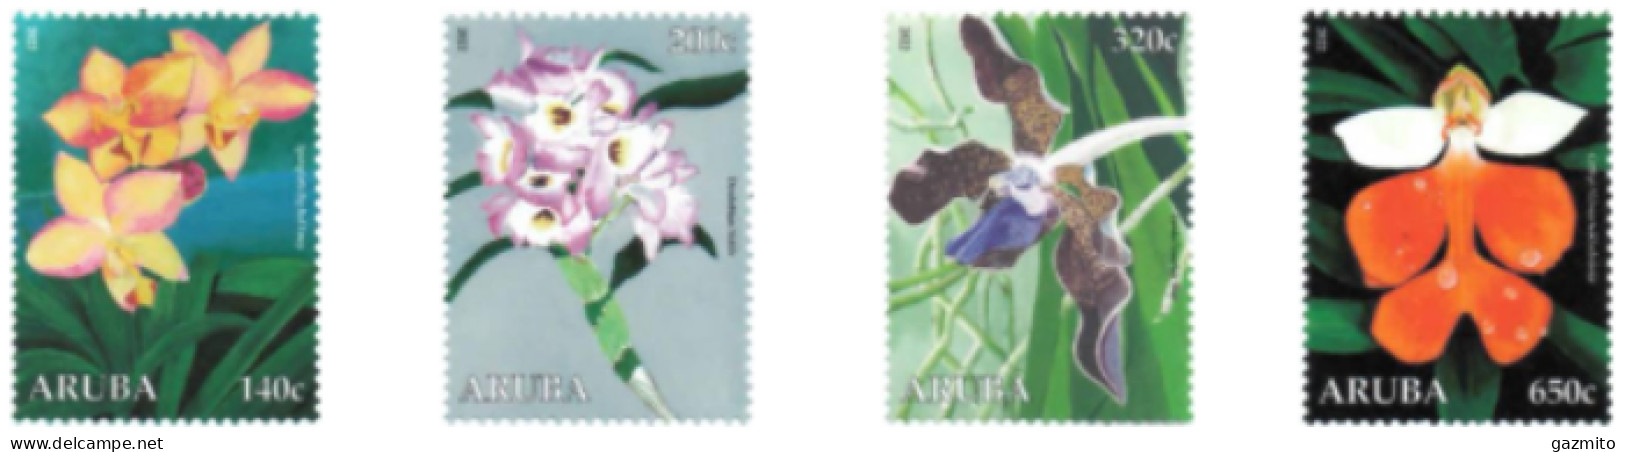 Aruba 2022, Orchids, 4val - Curacao, Netherlands Antilles, Aruba